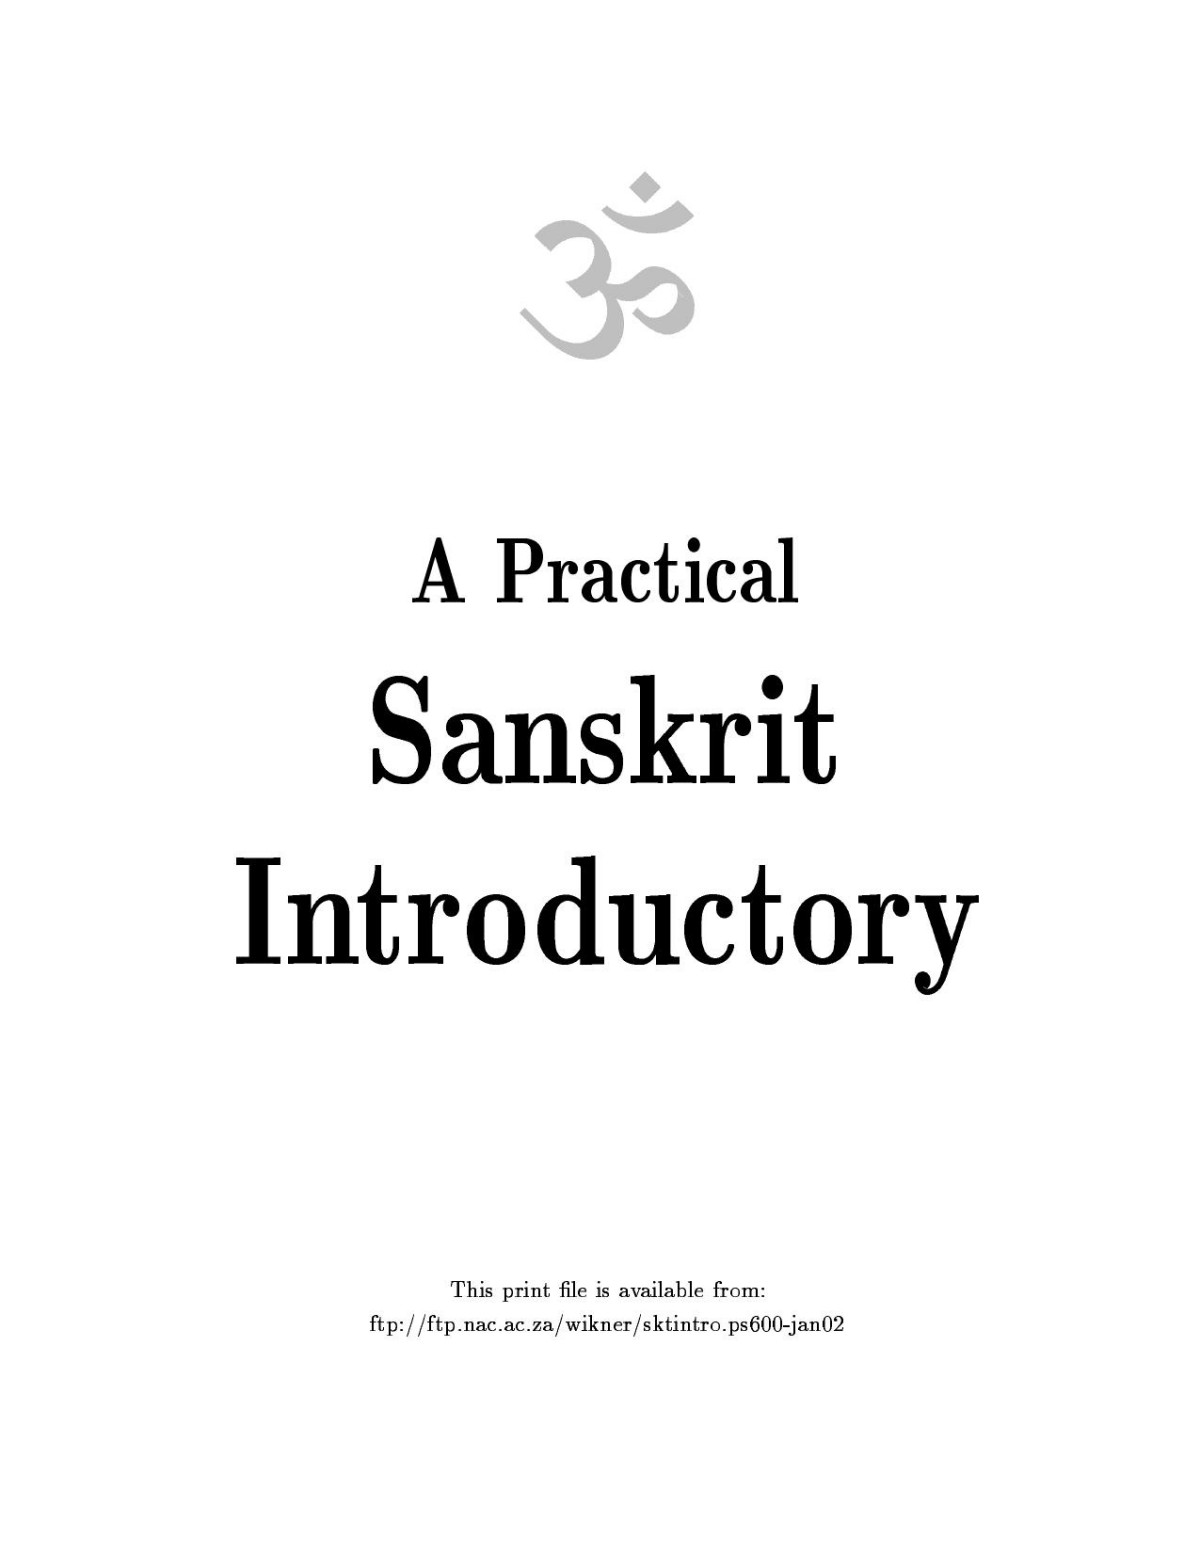 A Practical Sanskrit Introductory